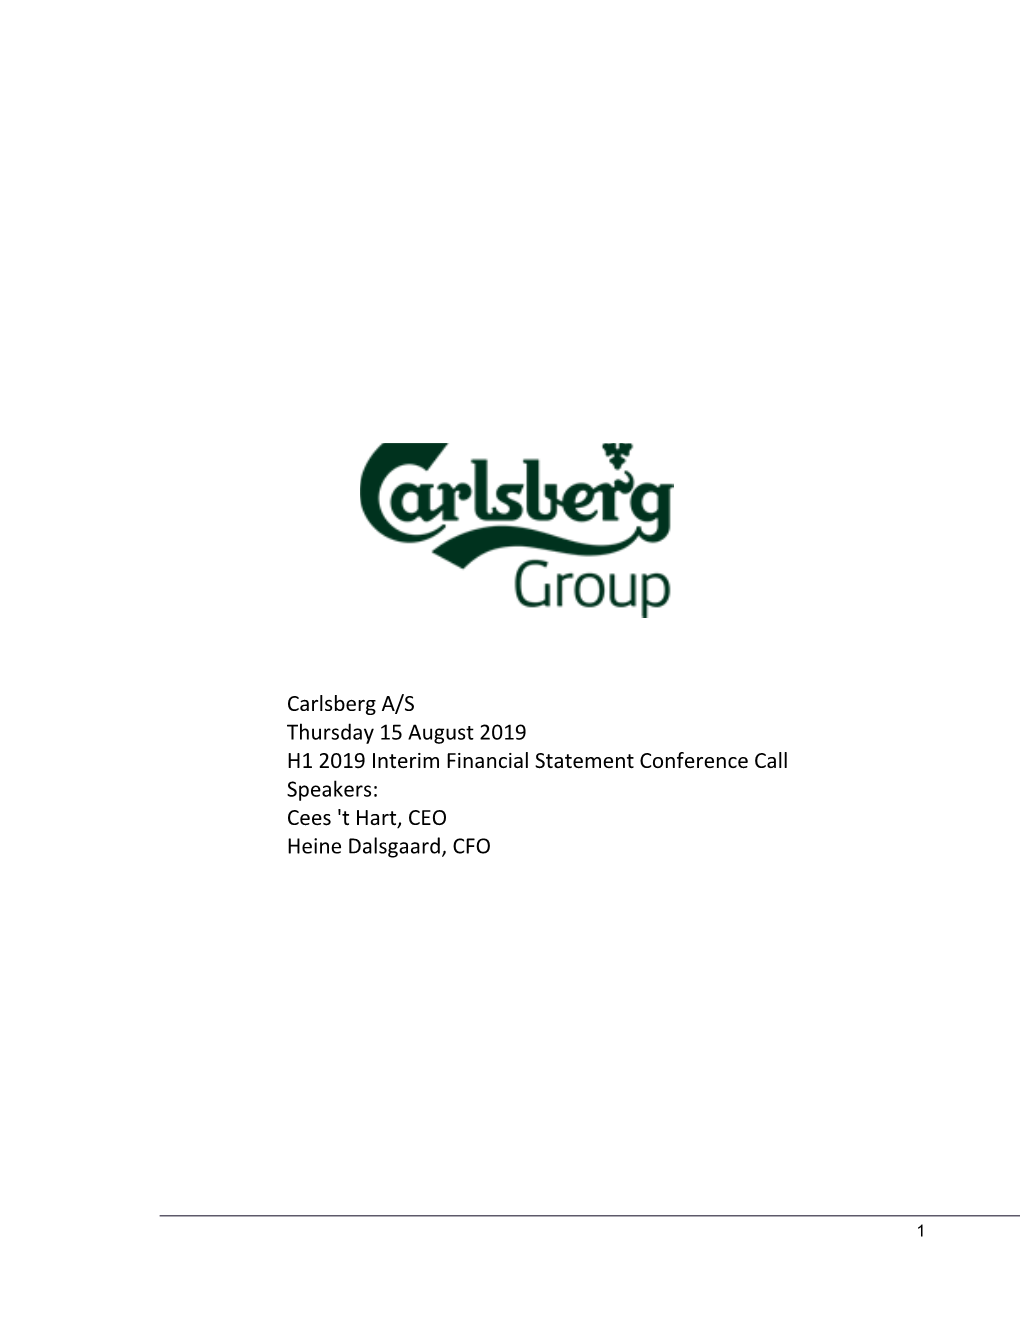 Carlsberg H1 2019 Conference Call